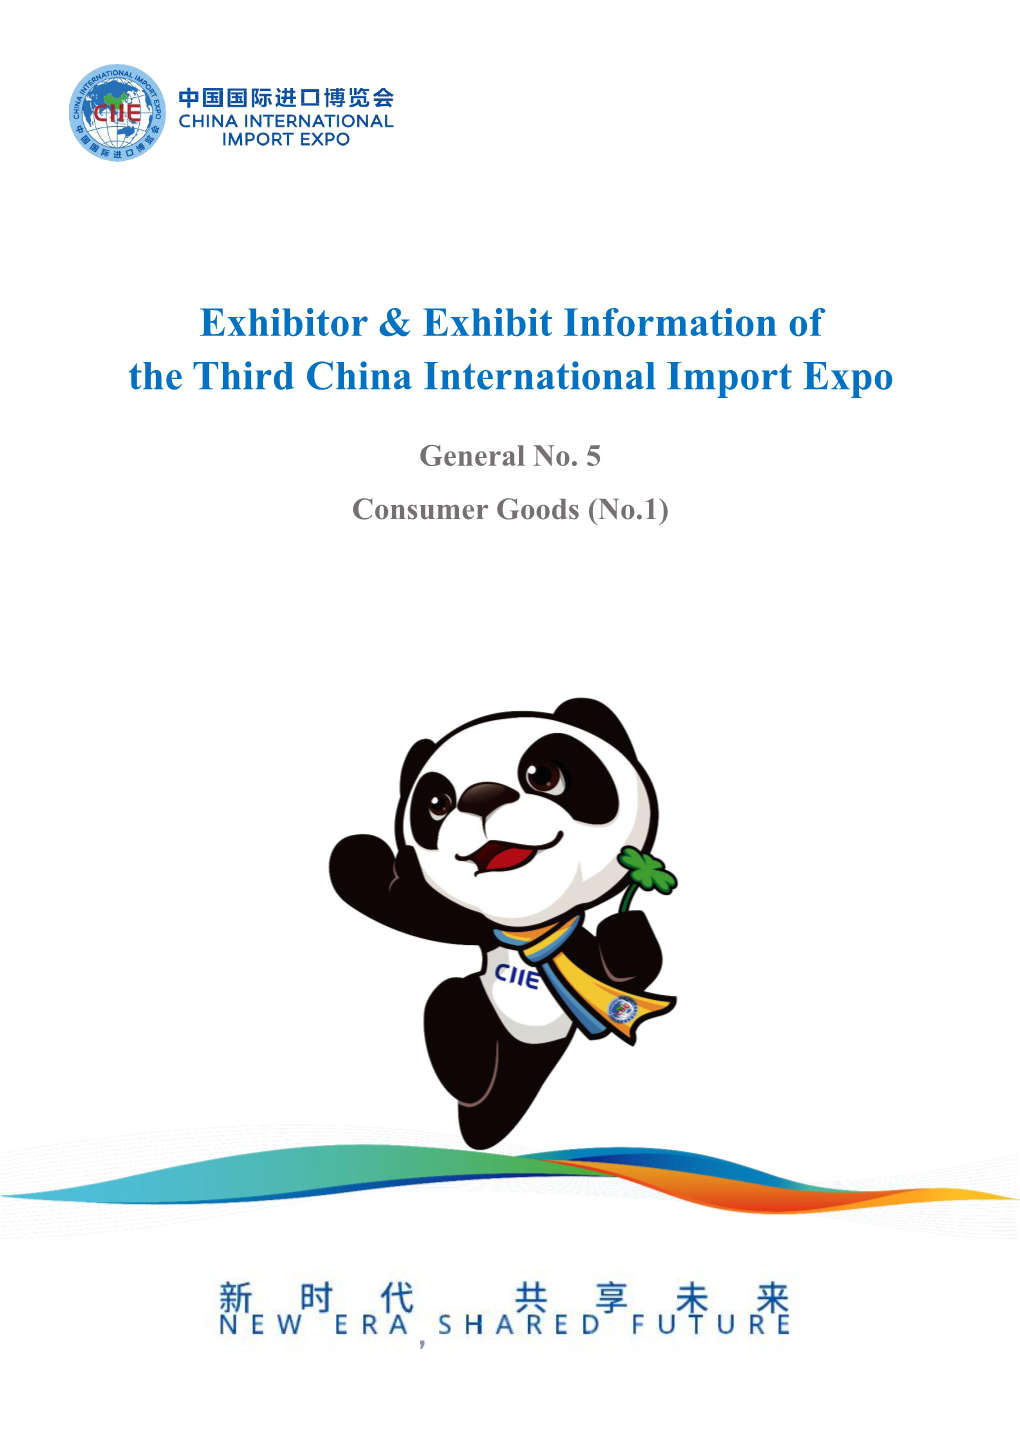 Exhibitor & Exhibit Information of the Third China International Import Expo